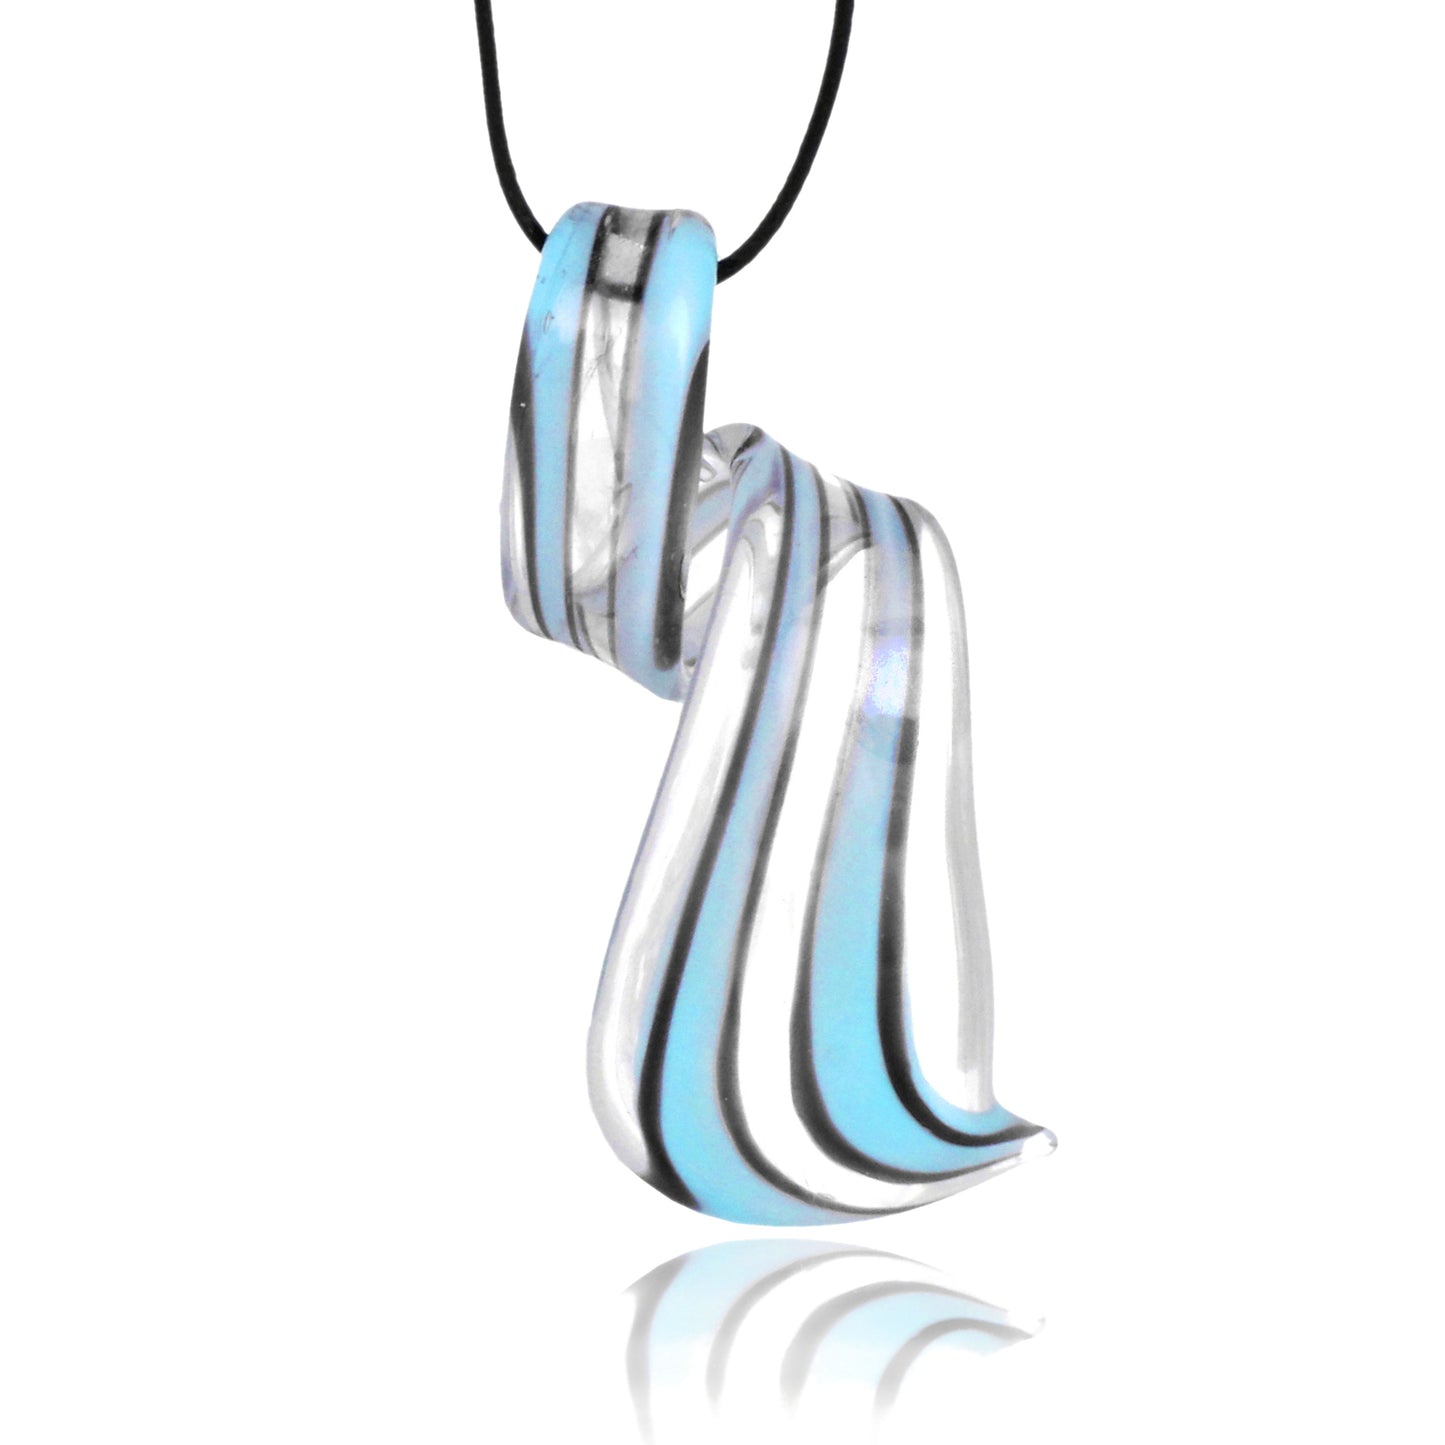 BESHEEK Handmade Murano Inspired Blown Glass Lampwork Art Blue and Silver Twist Curl Necklace Pendant ? Handcrafted Artisan Hypoallergenic Italian Style Jewelry